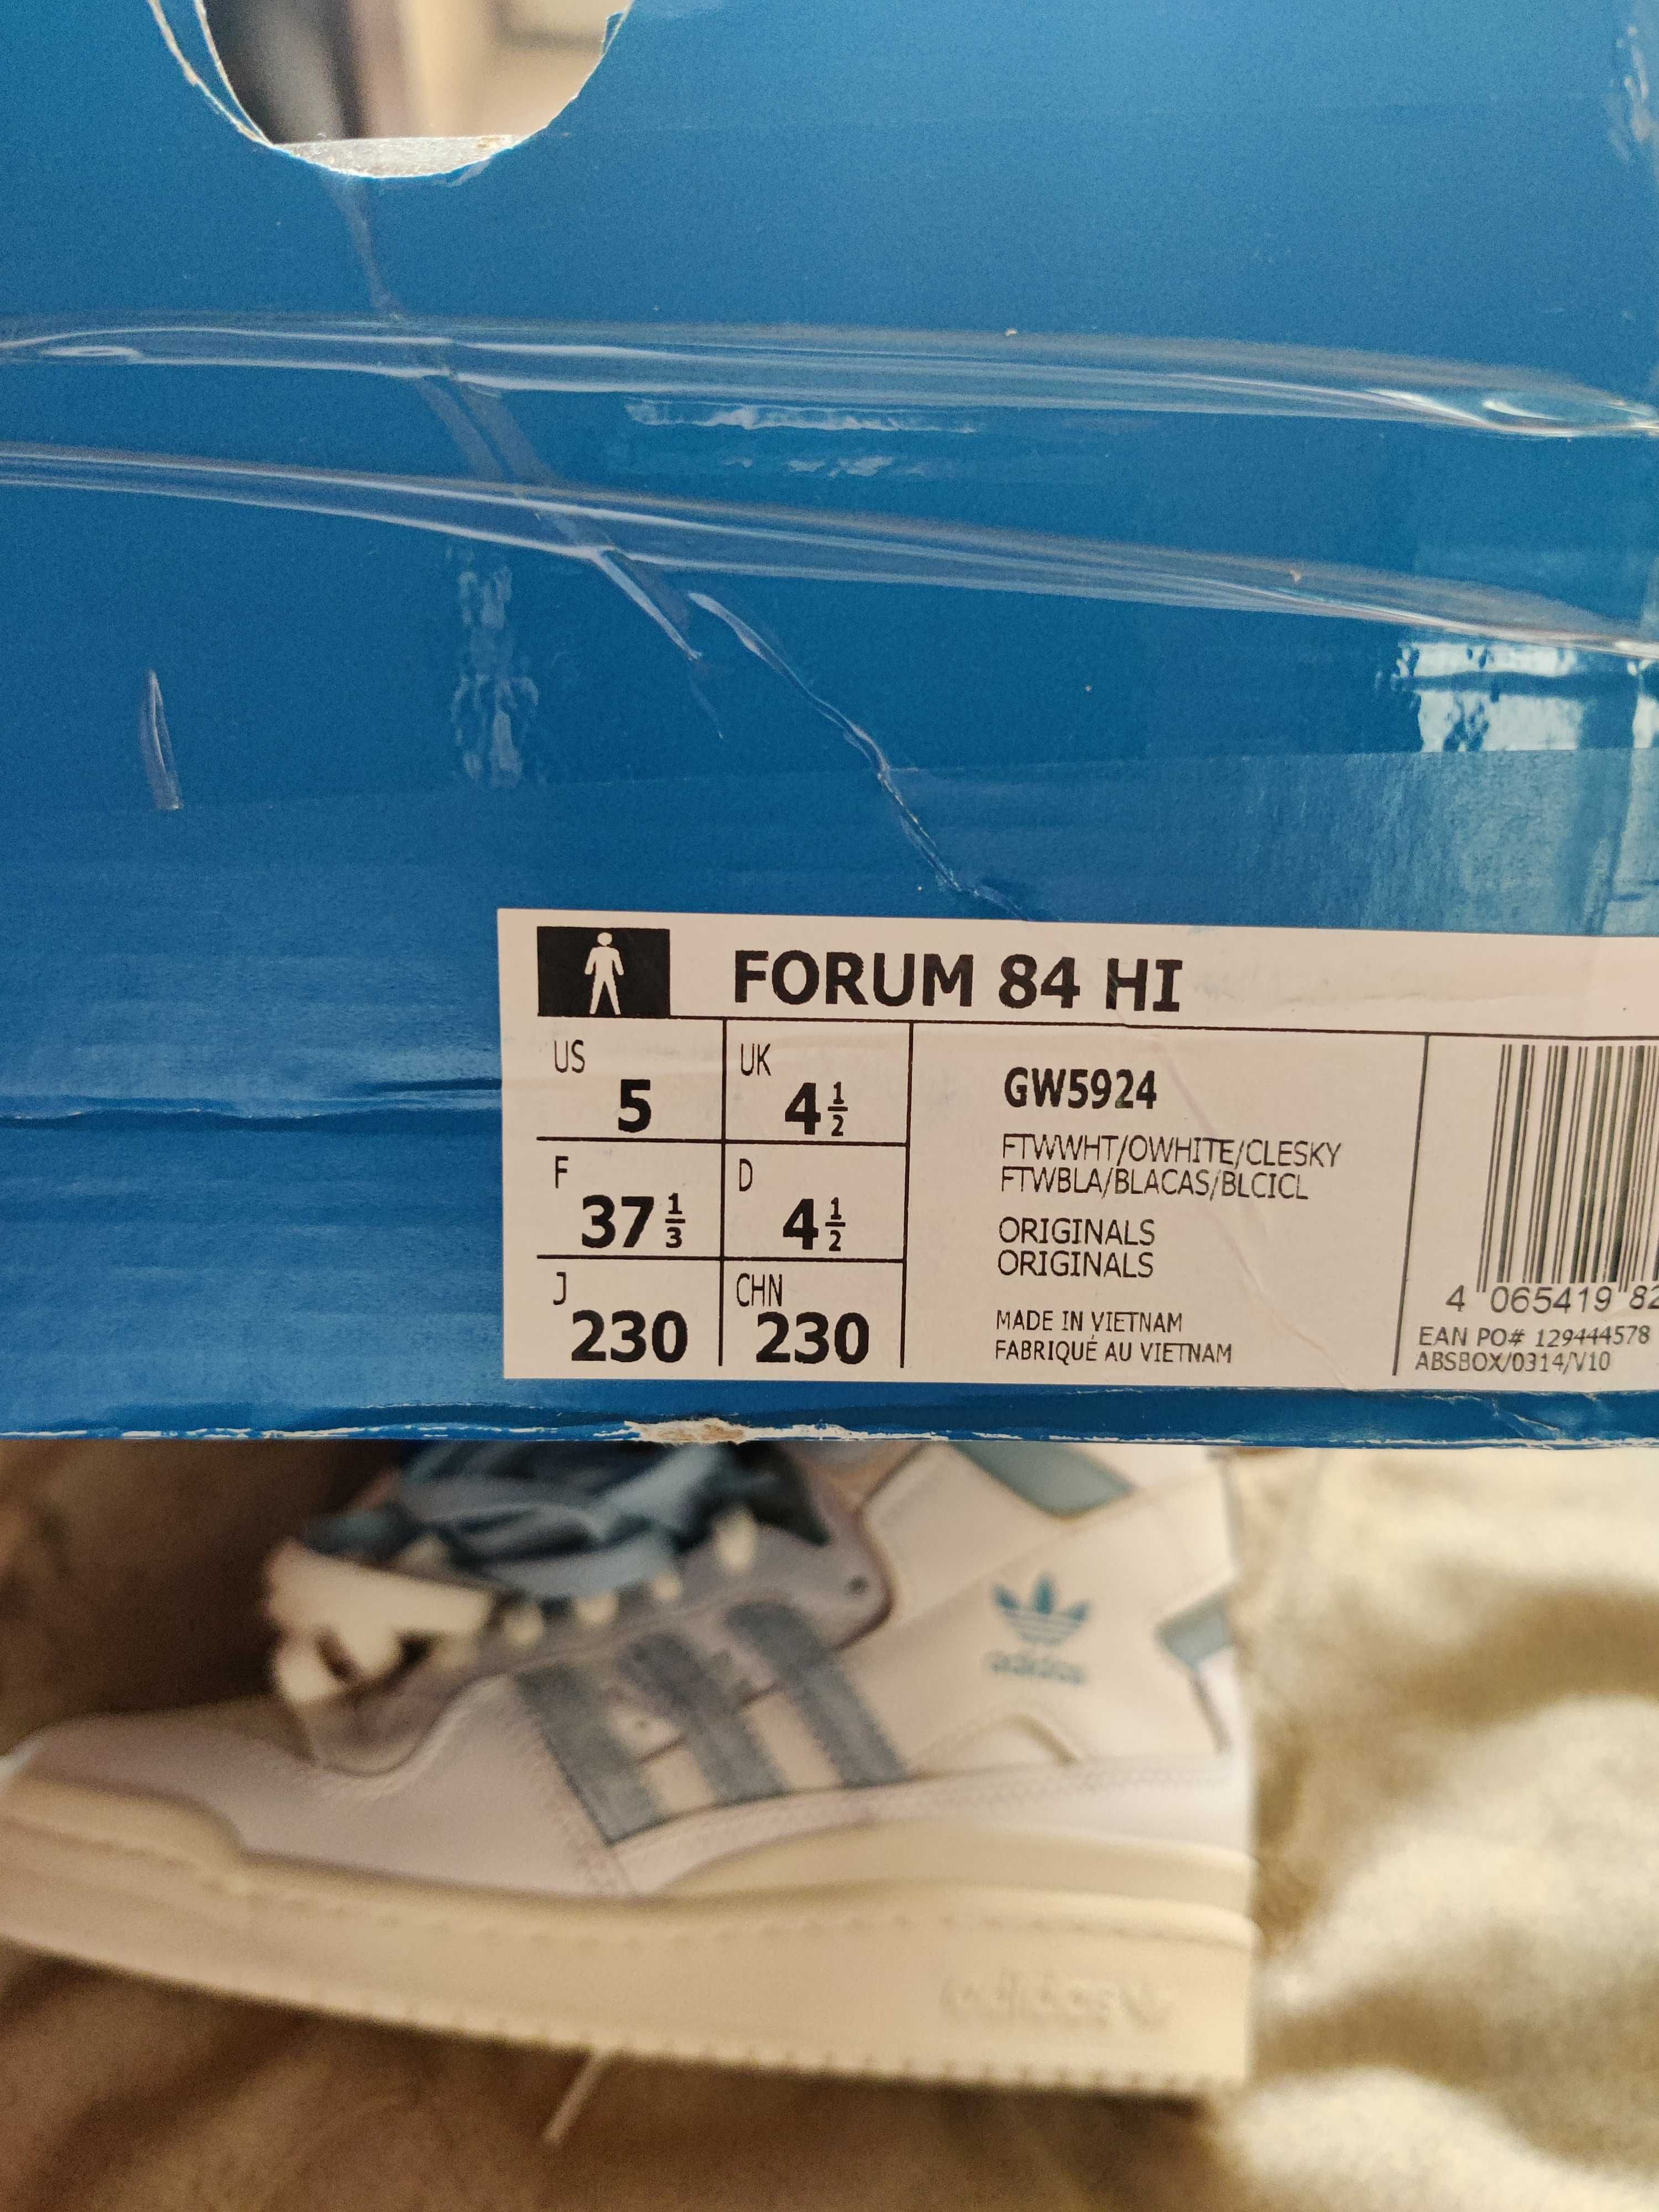 Adidas Forum 84 HI